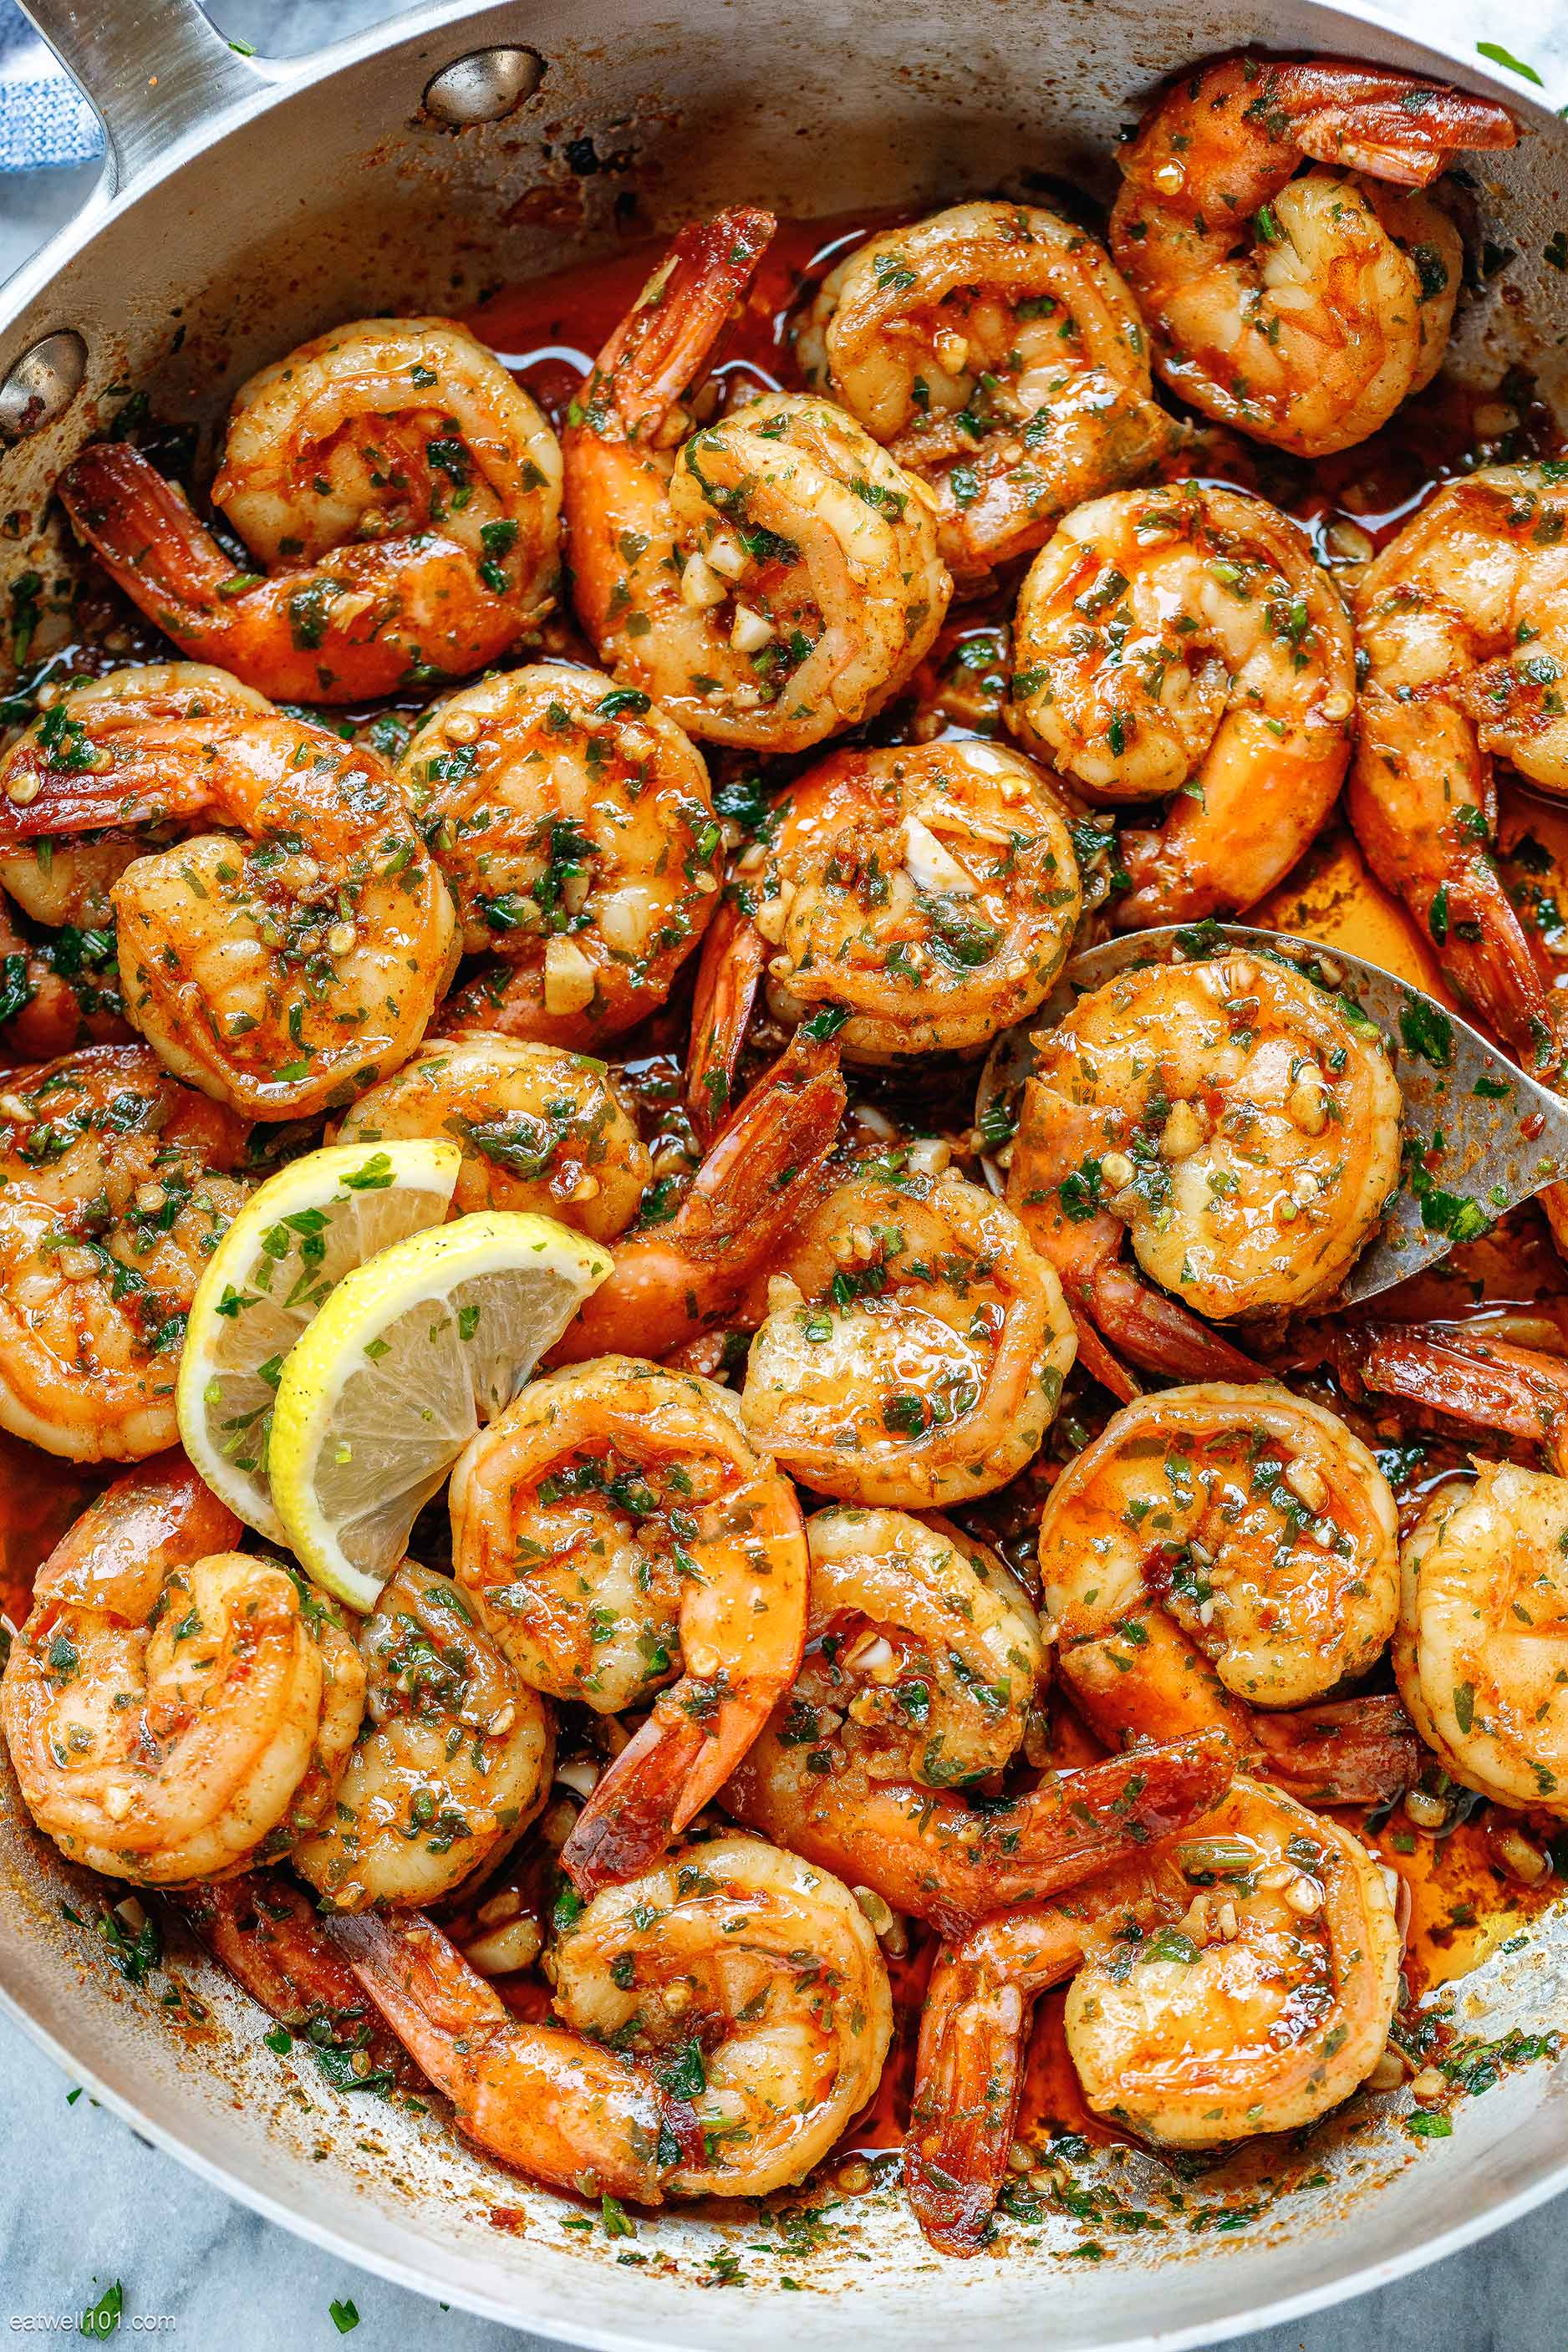 Garlic Shrimp Skillet - #recipe by #eatwell101 - https://www.eatwell101.com/garlic-shrimp-recipe